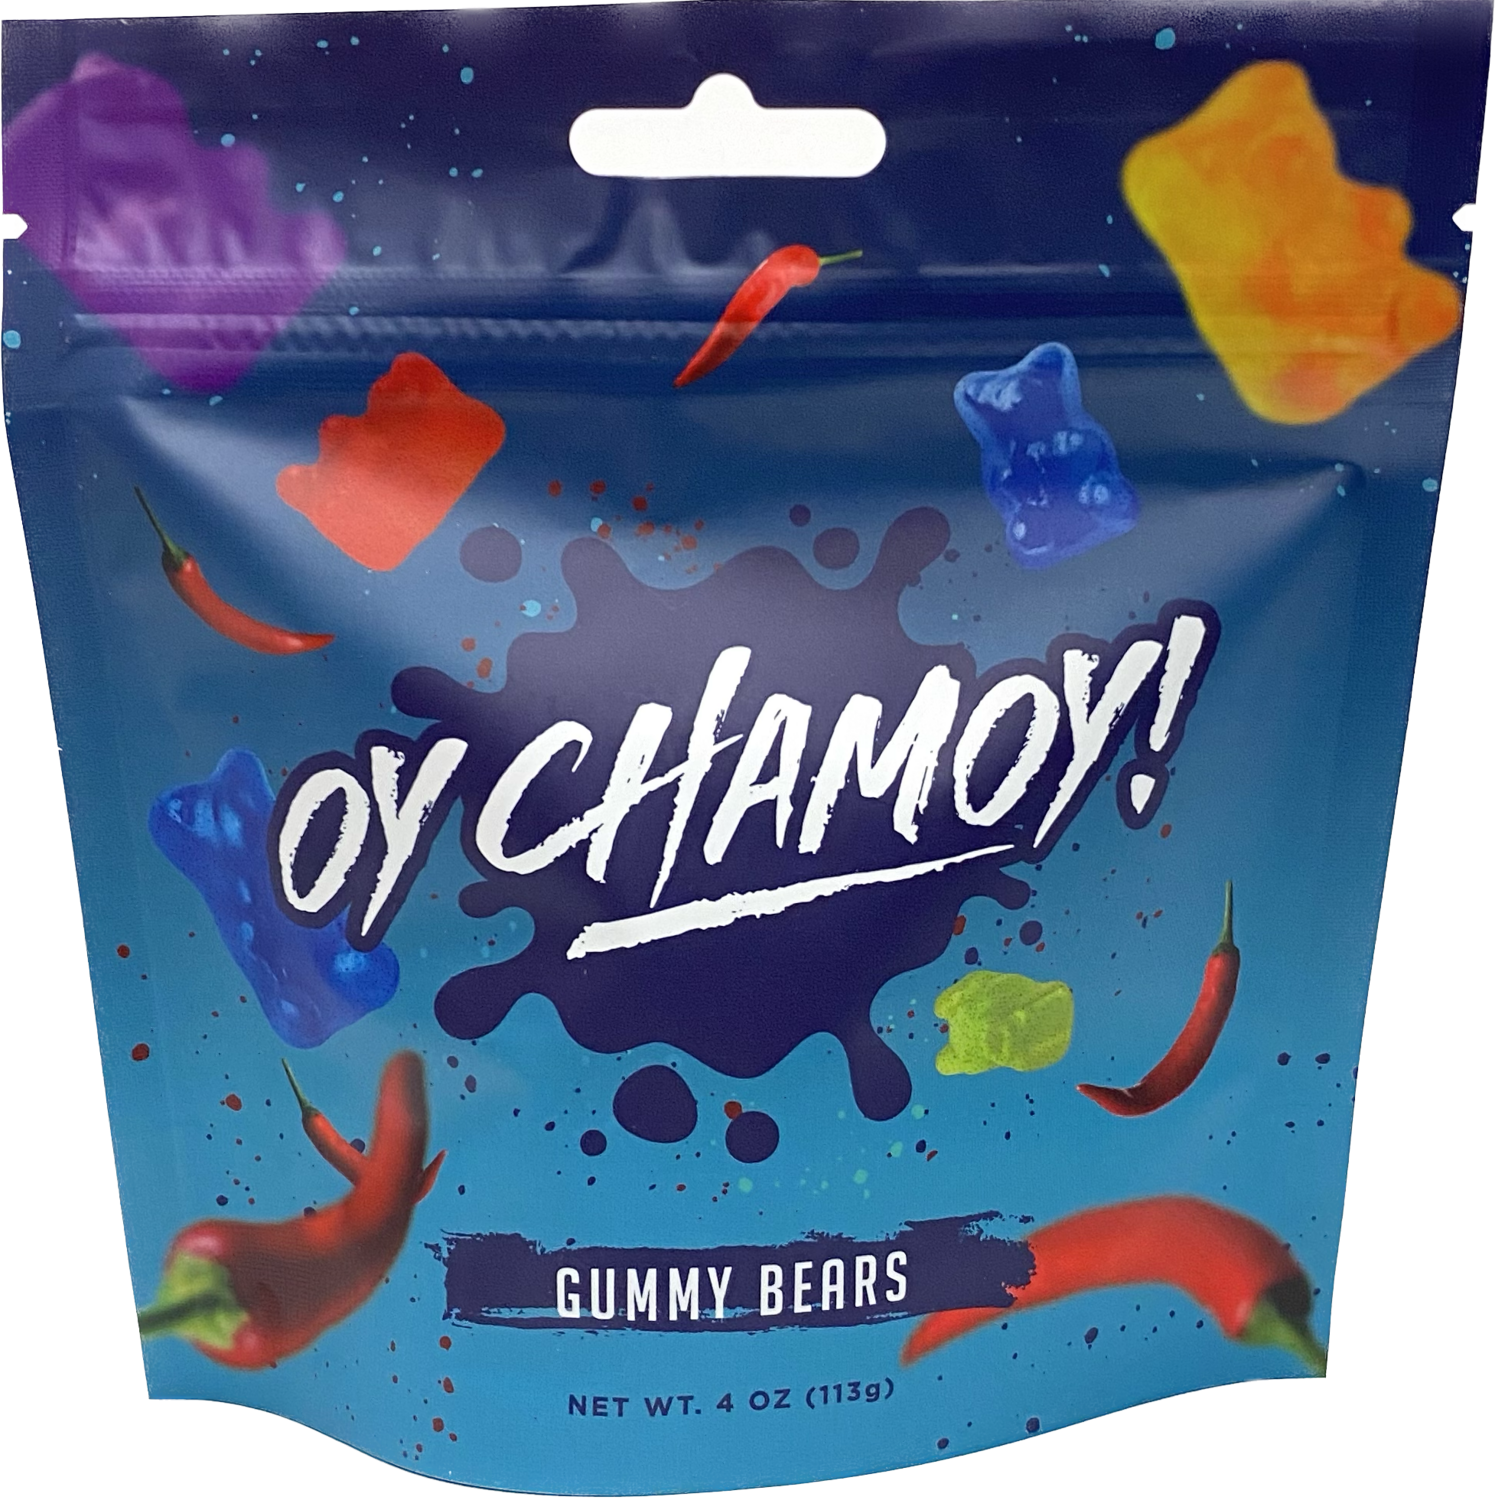 Oy Chamoy Gummy Bears 4oz